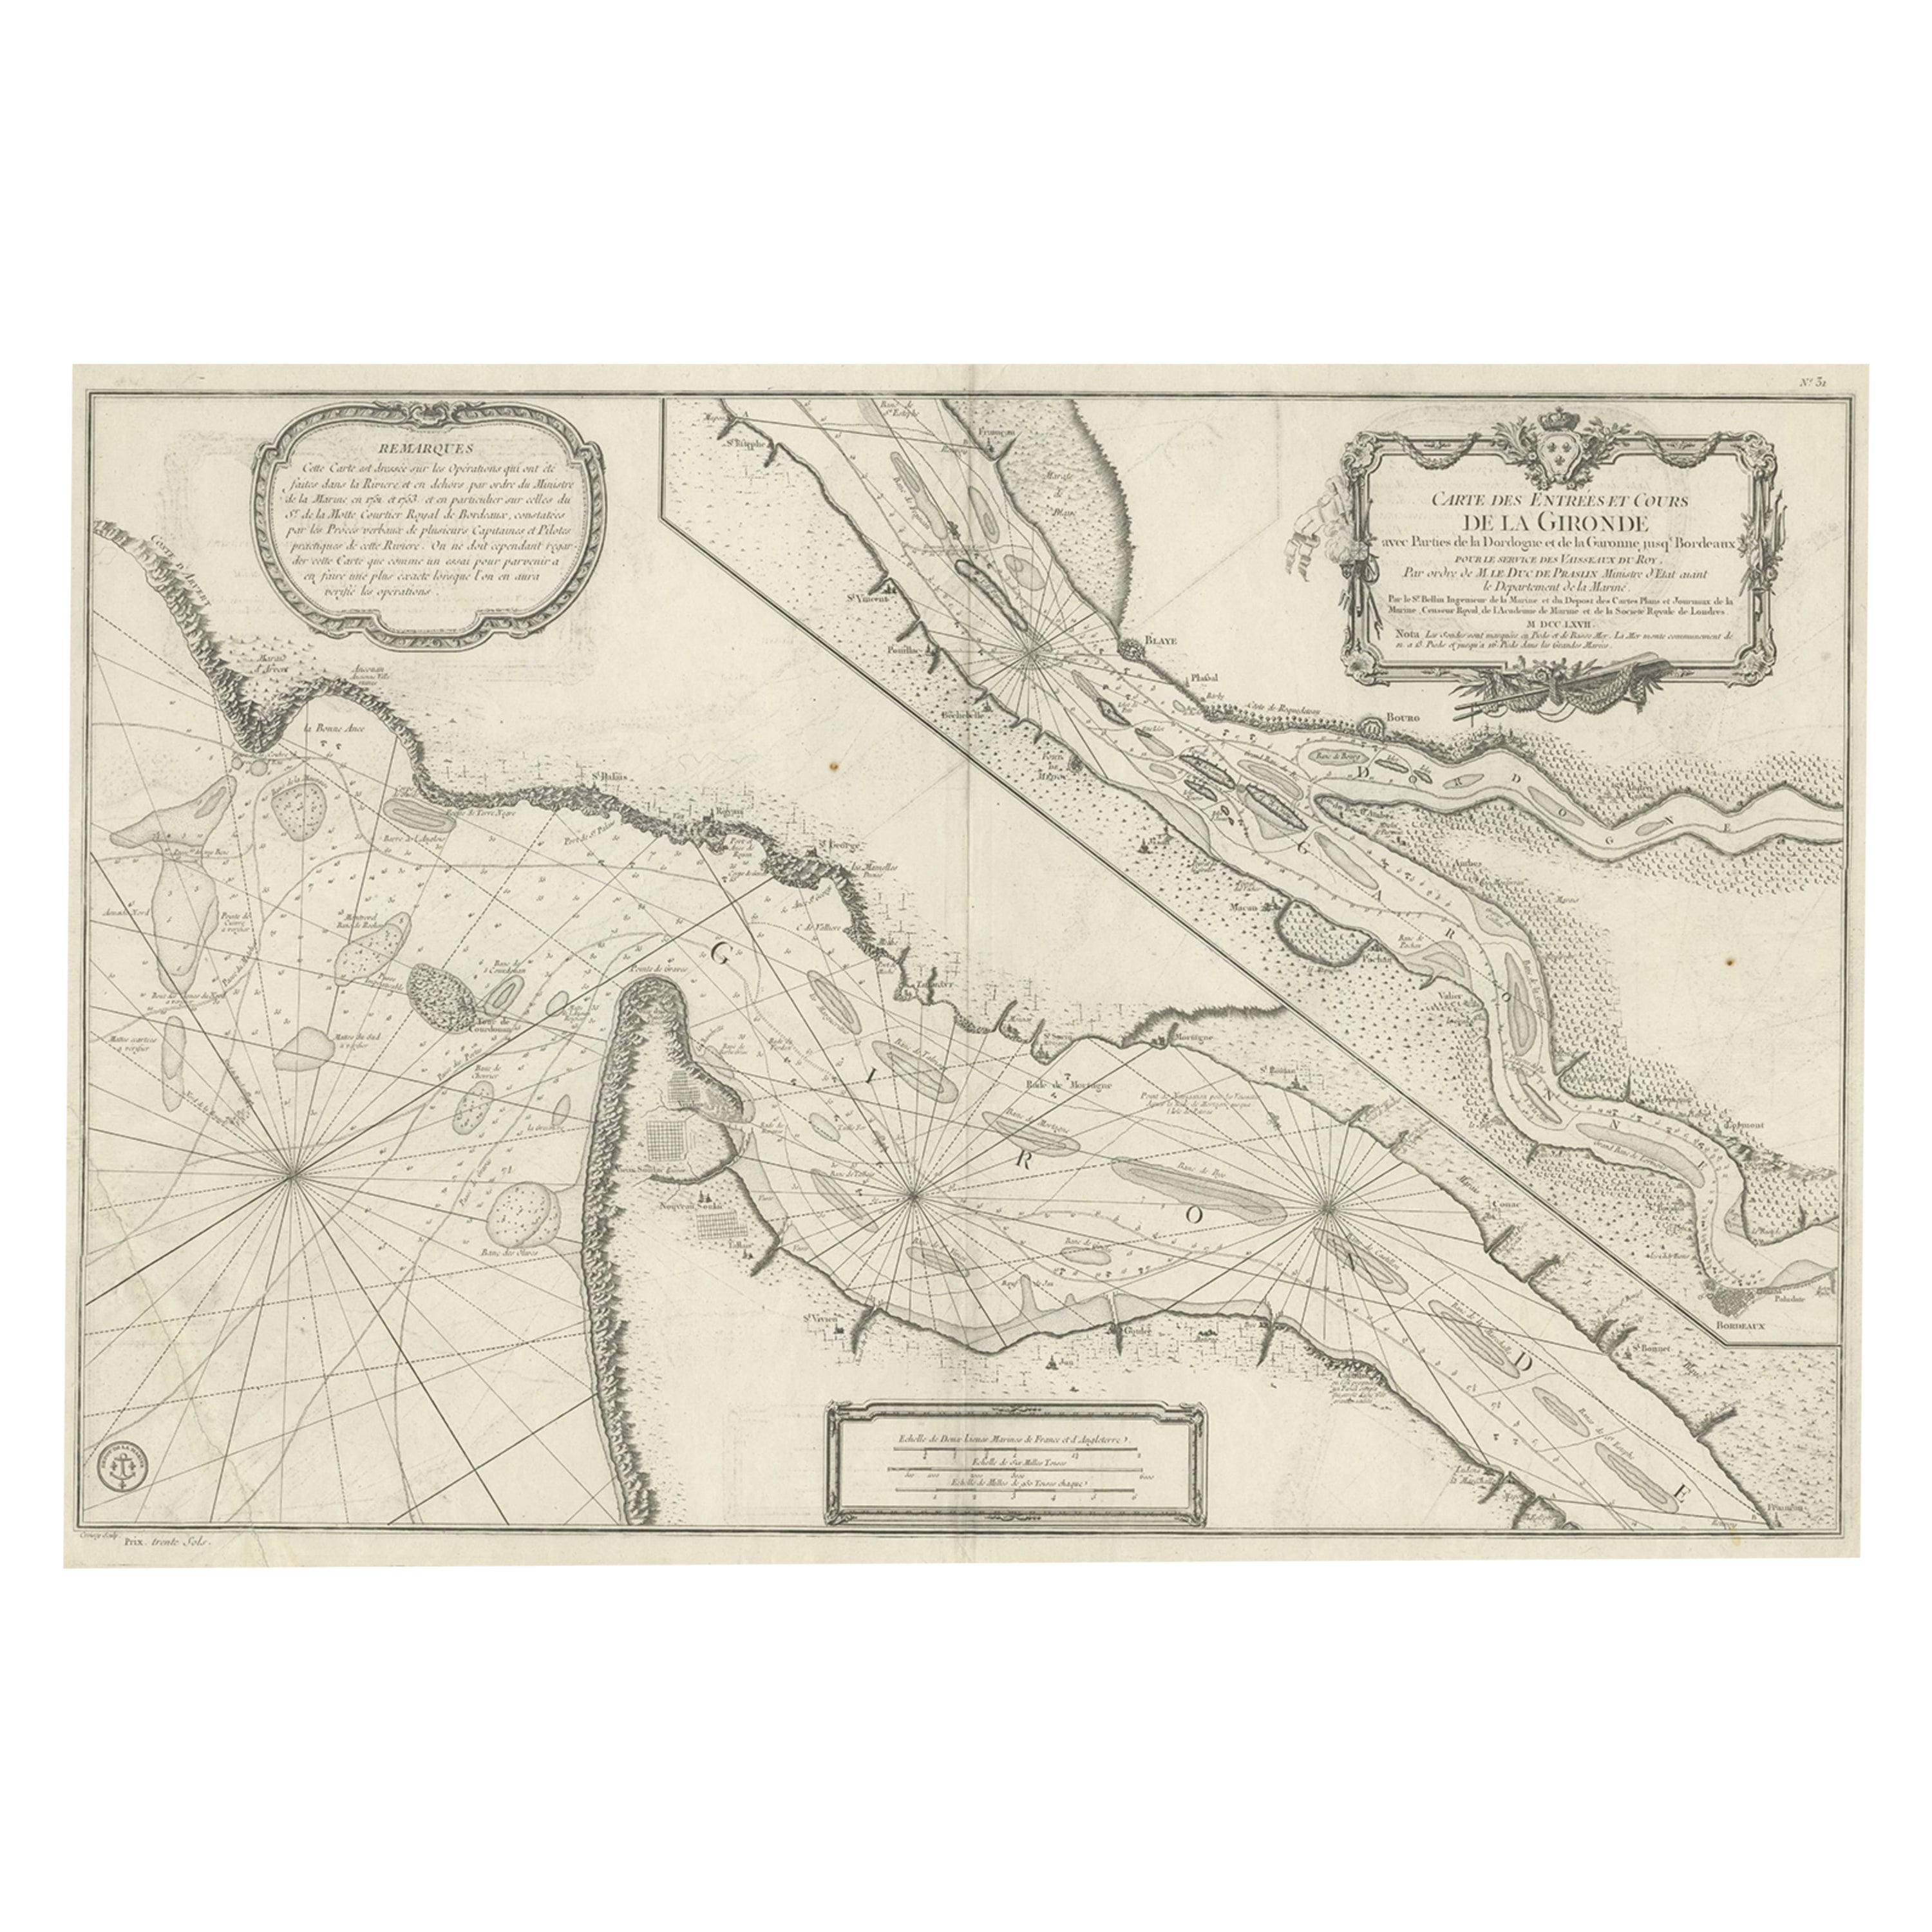 Gironde, Where Rivers Dordogne & Garonne Meet Near Bordeaux, France, ca.1770